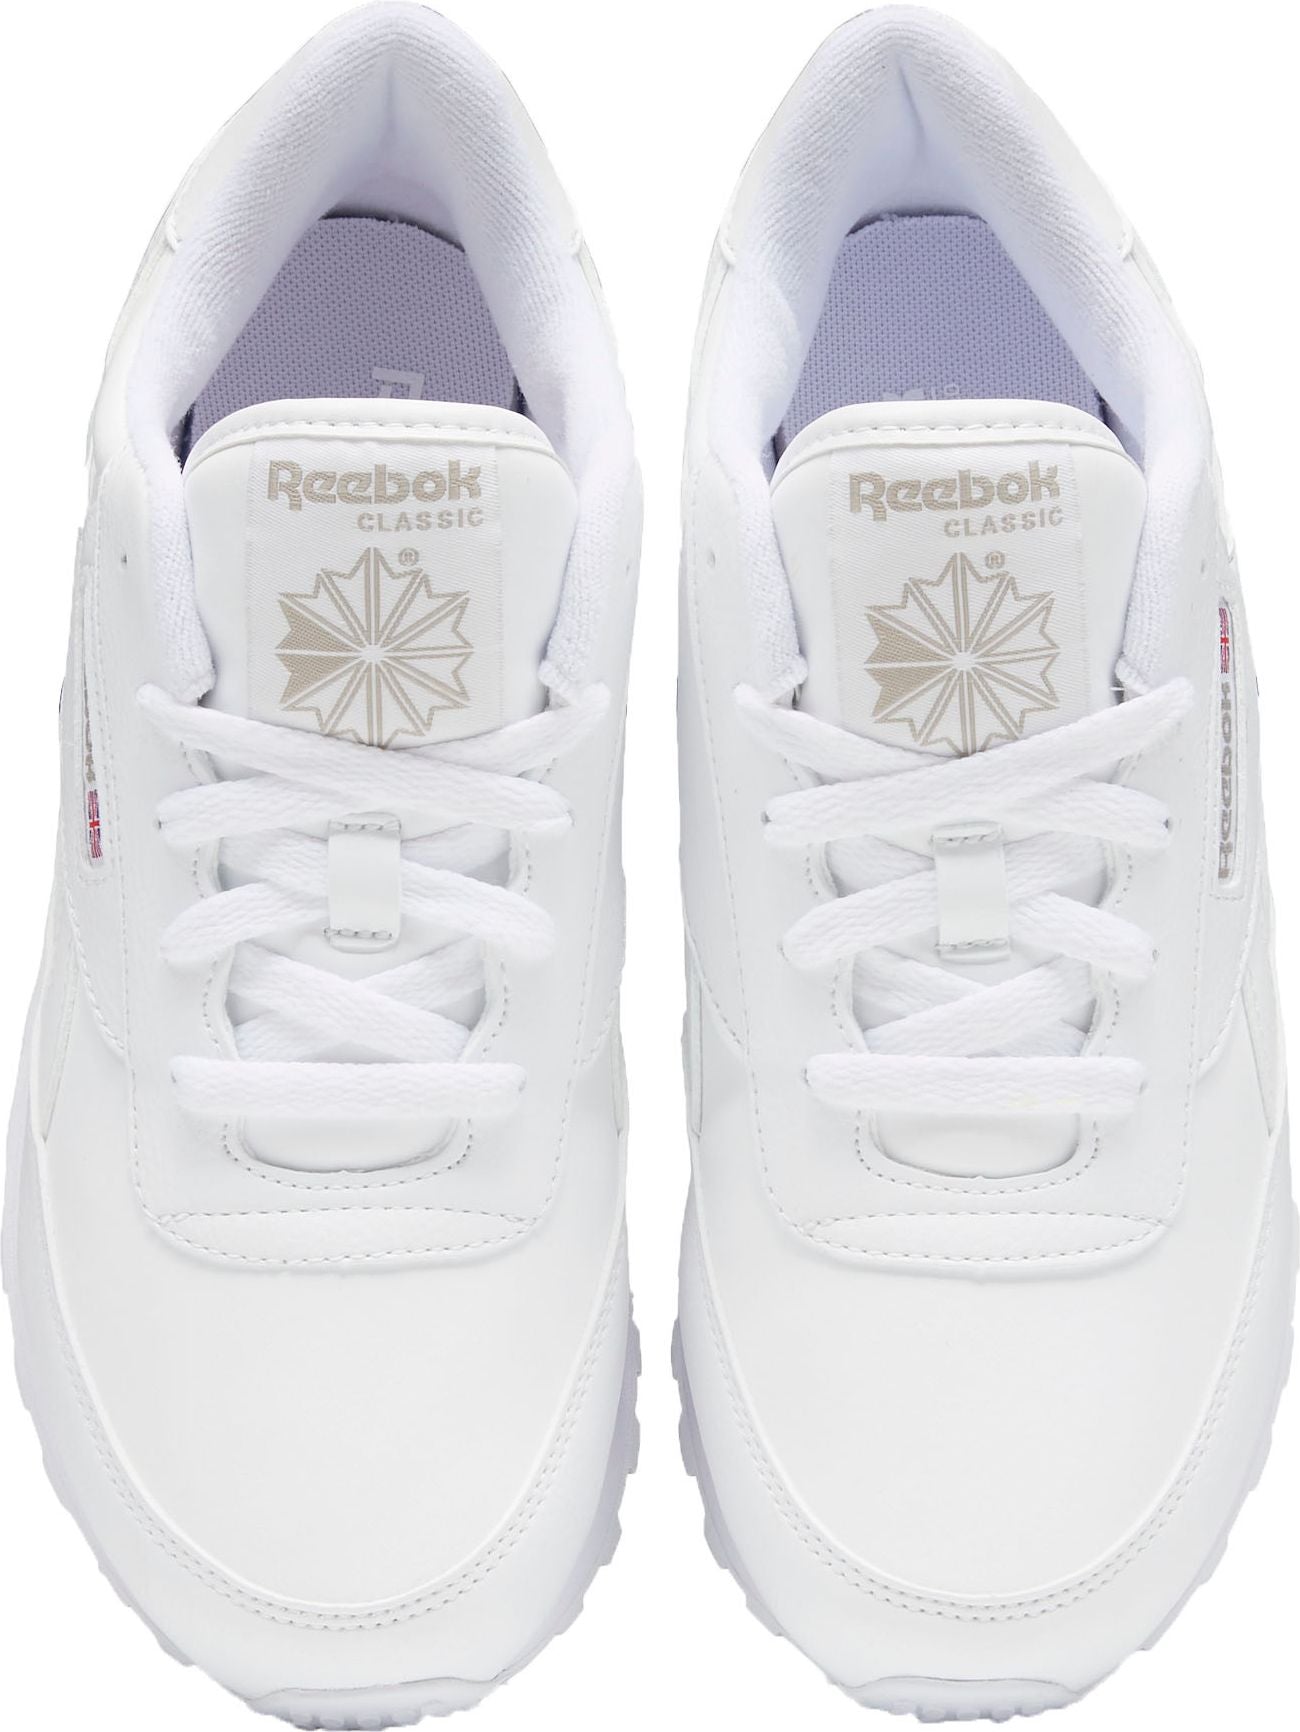 Reebok Shoes Classic Renaissance White